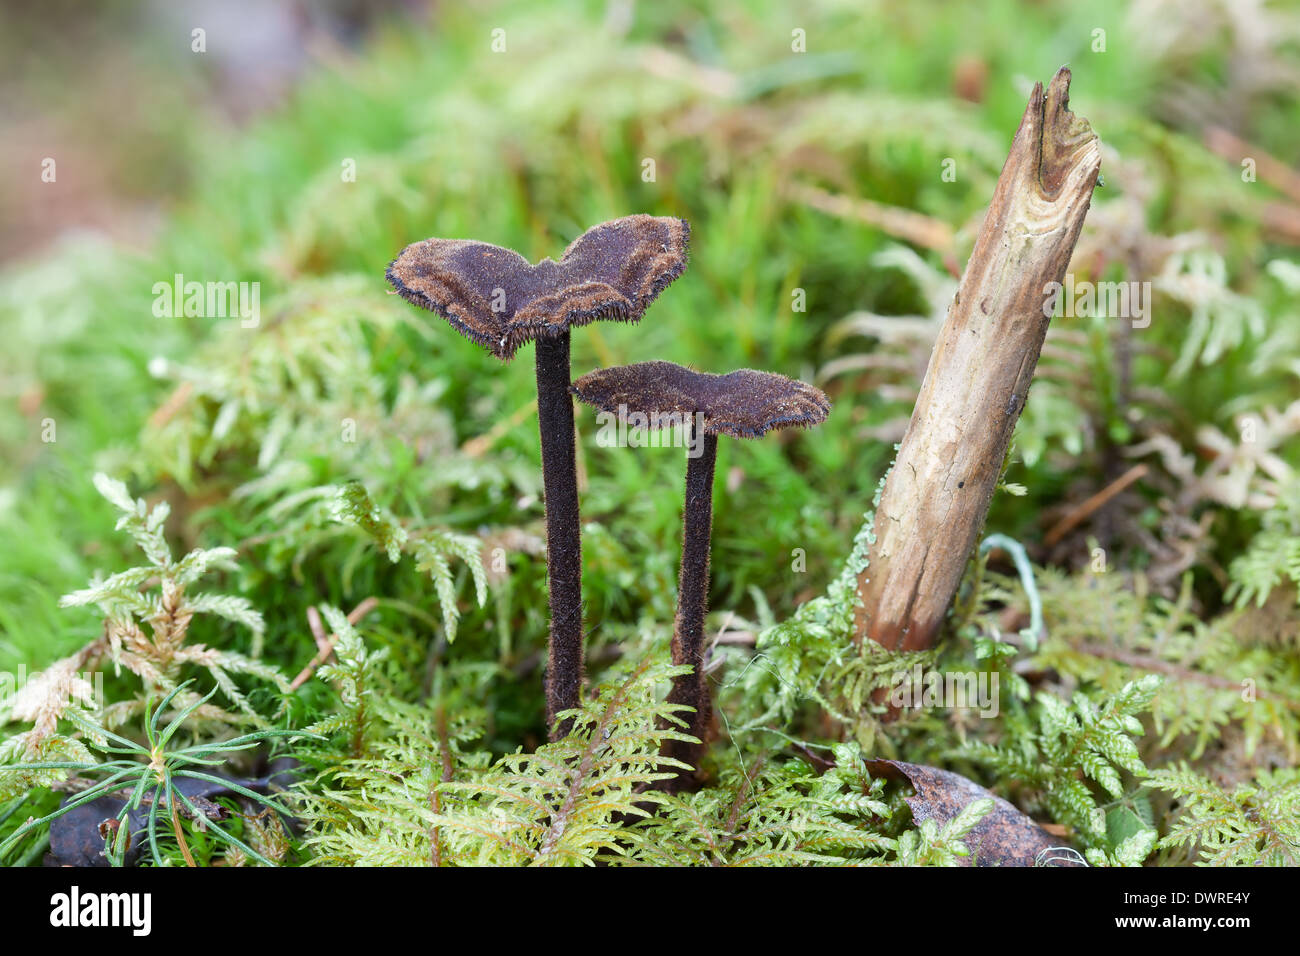 Pinecone mushroom growing on moss Stock Photo